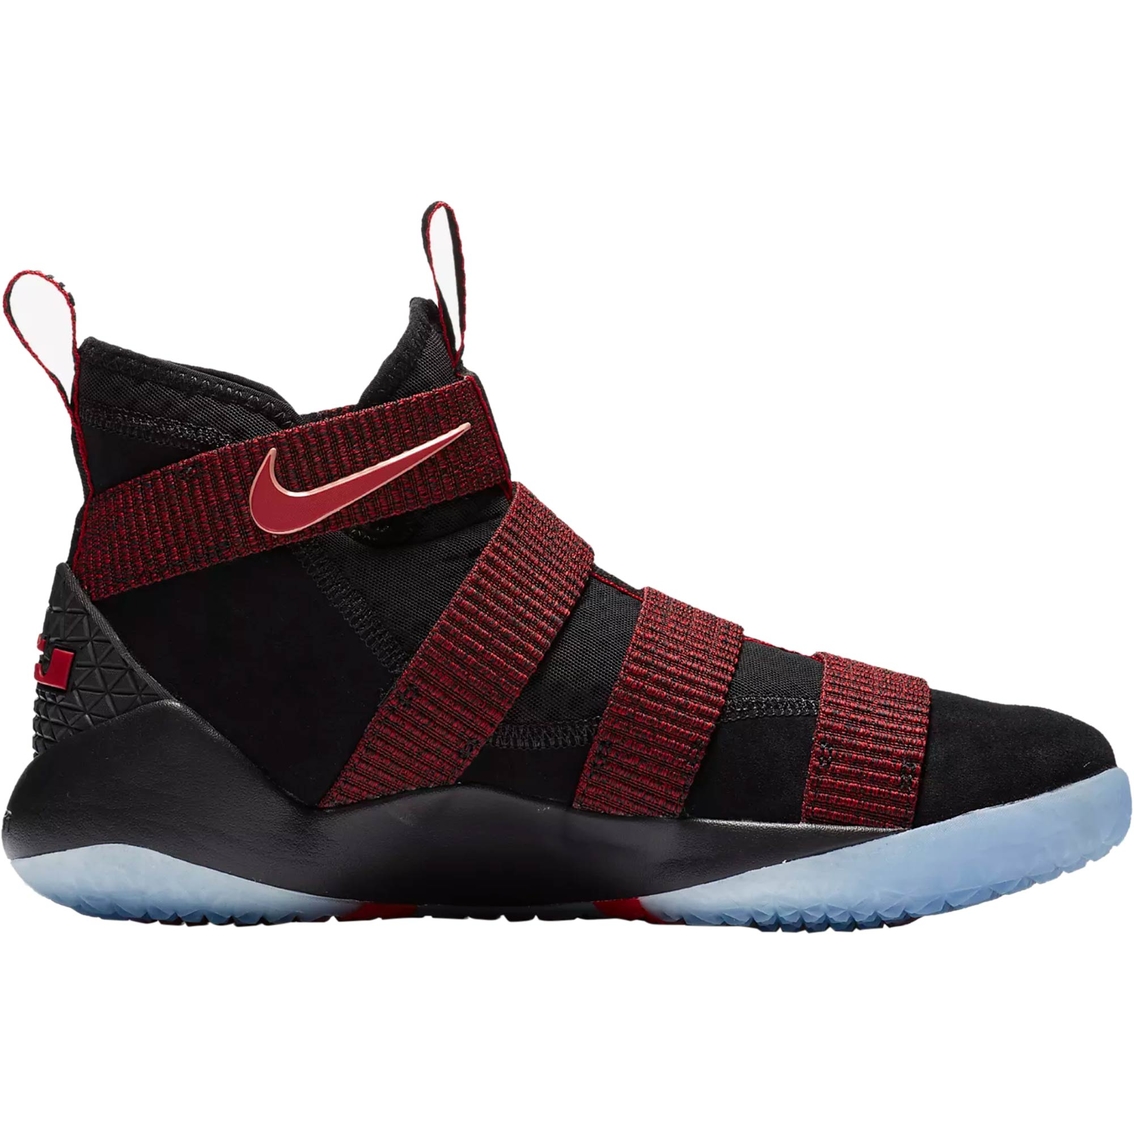 Nike Men's Lebron Soldier Xi Basketball Shoes | Basketball | Shoes ...